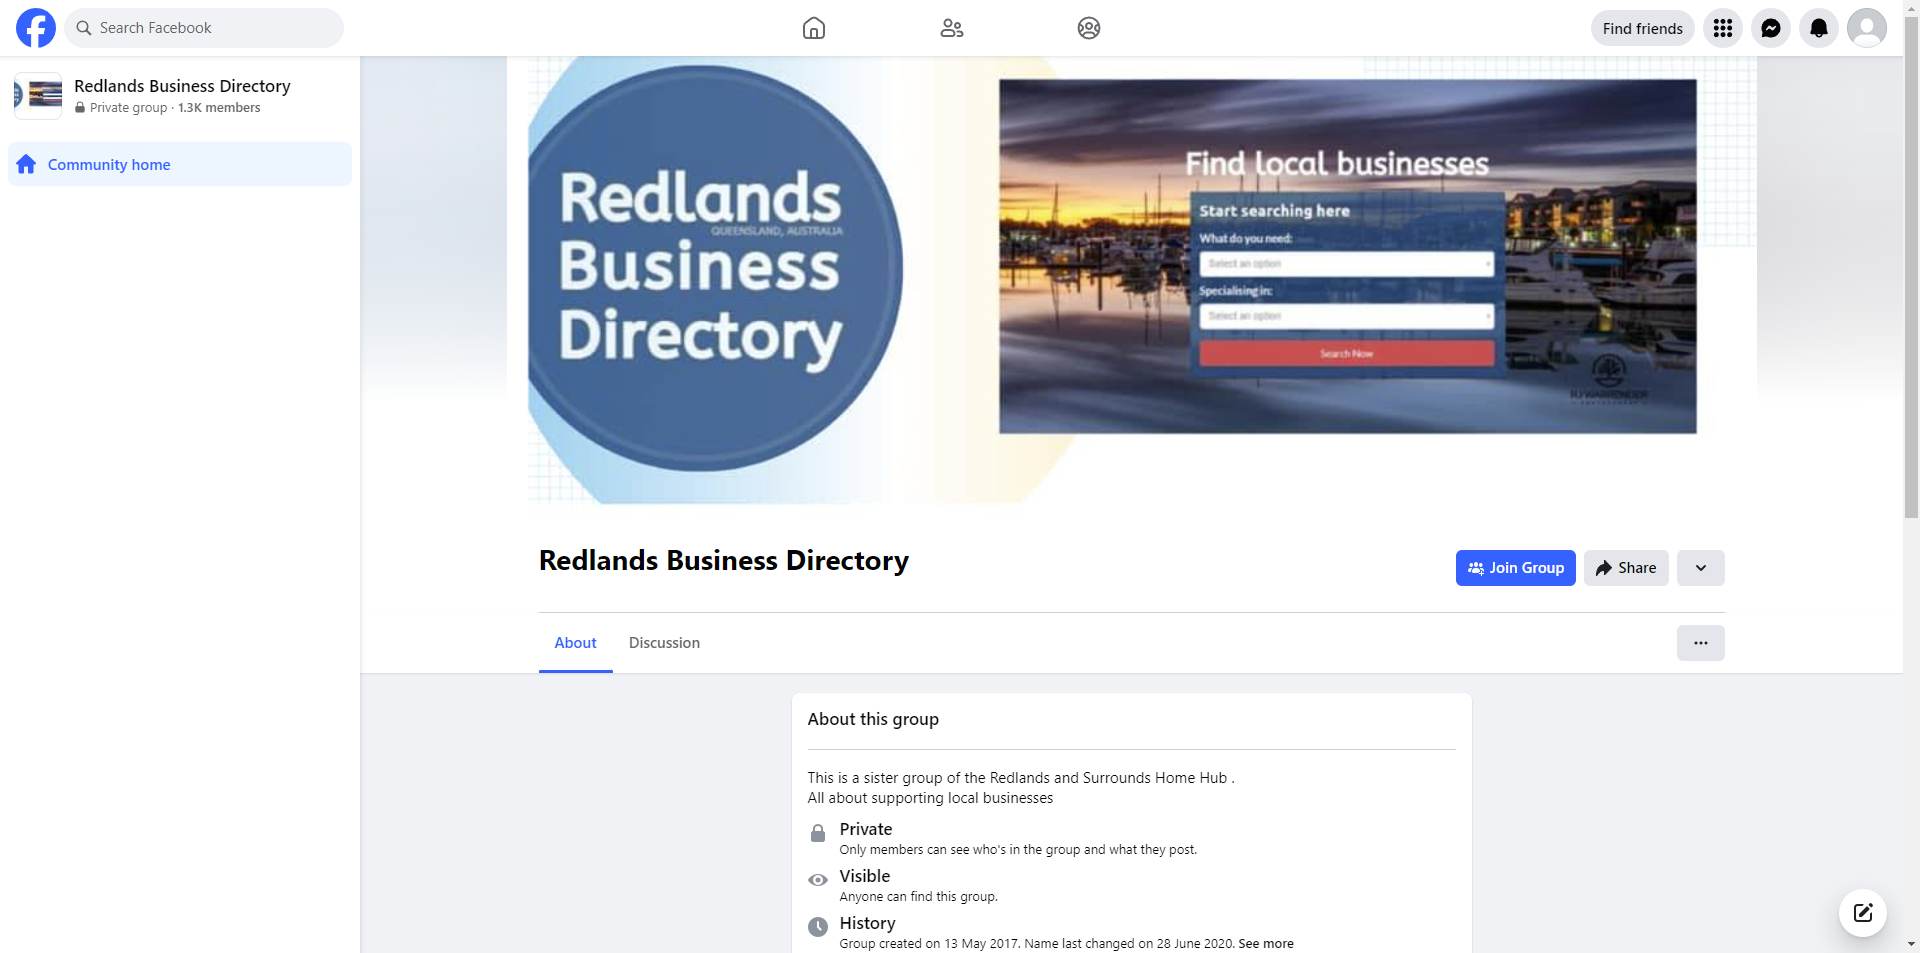 Redlands Business Directory